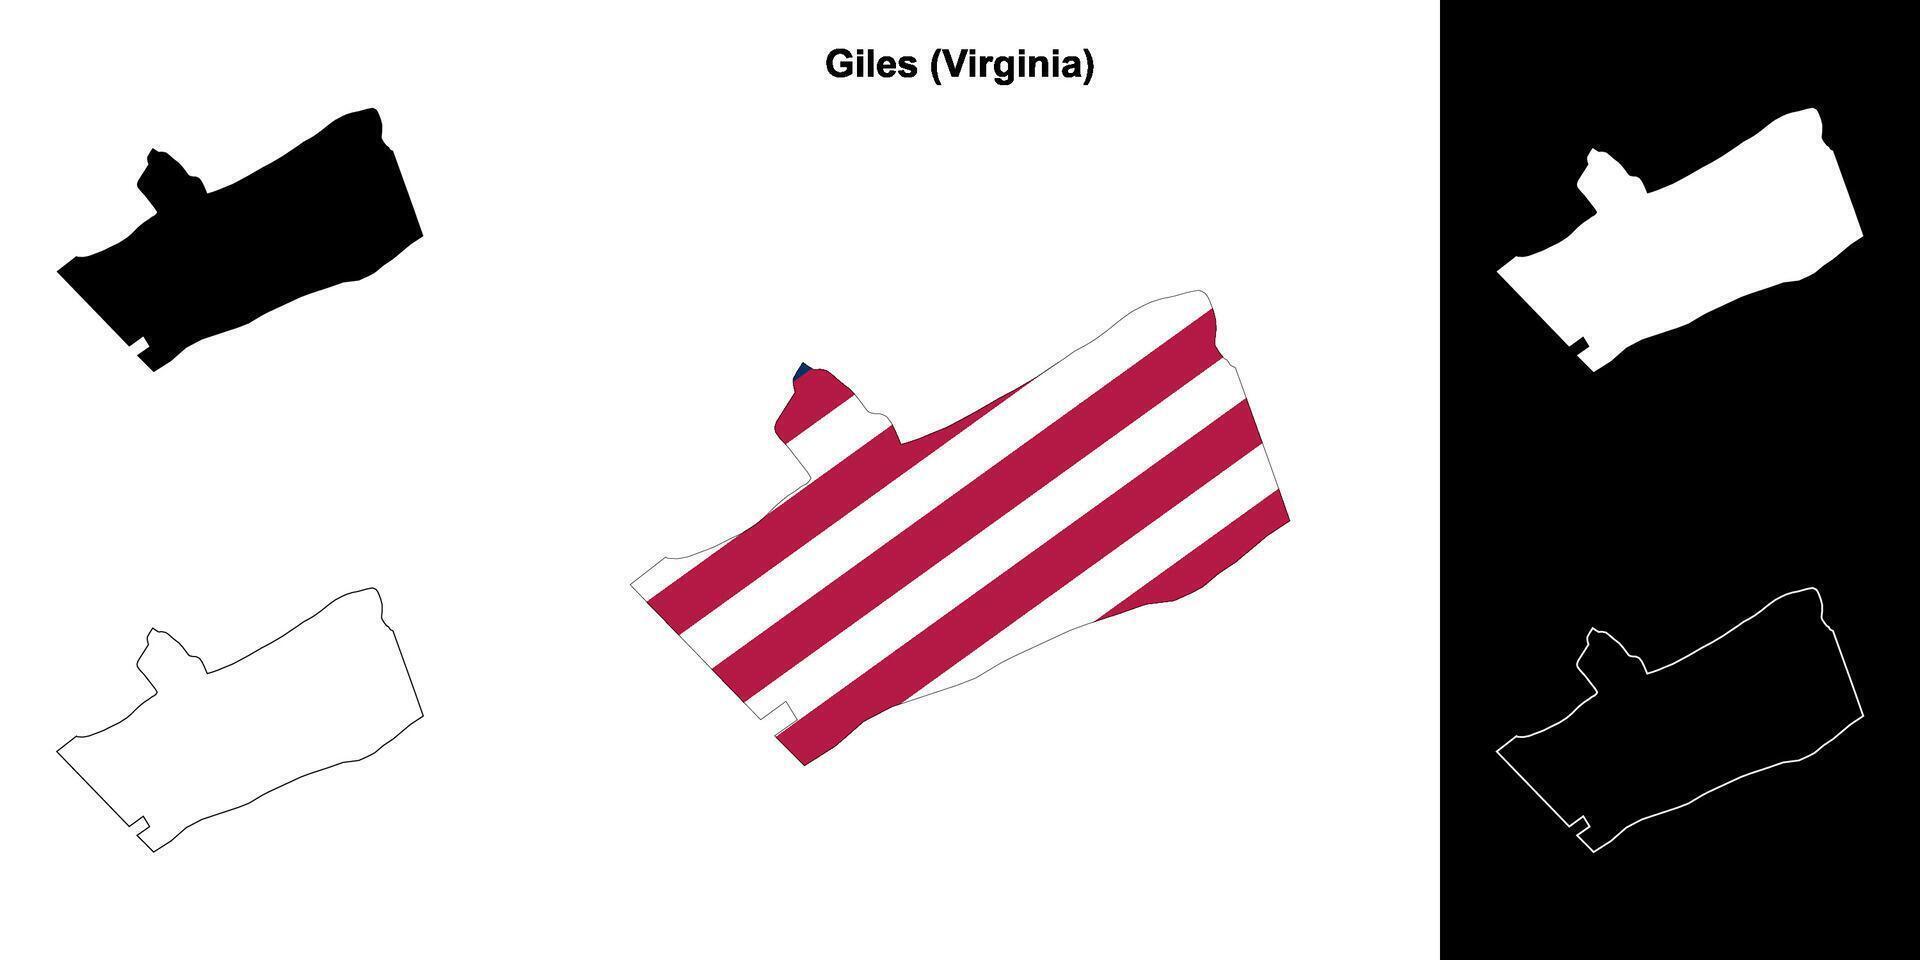 giles condado, Virginia contorno mapa conjunto vector